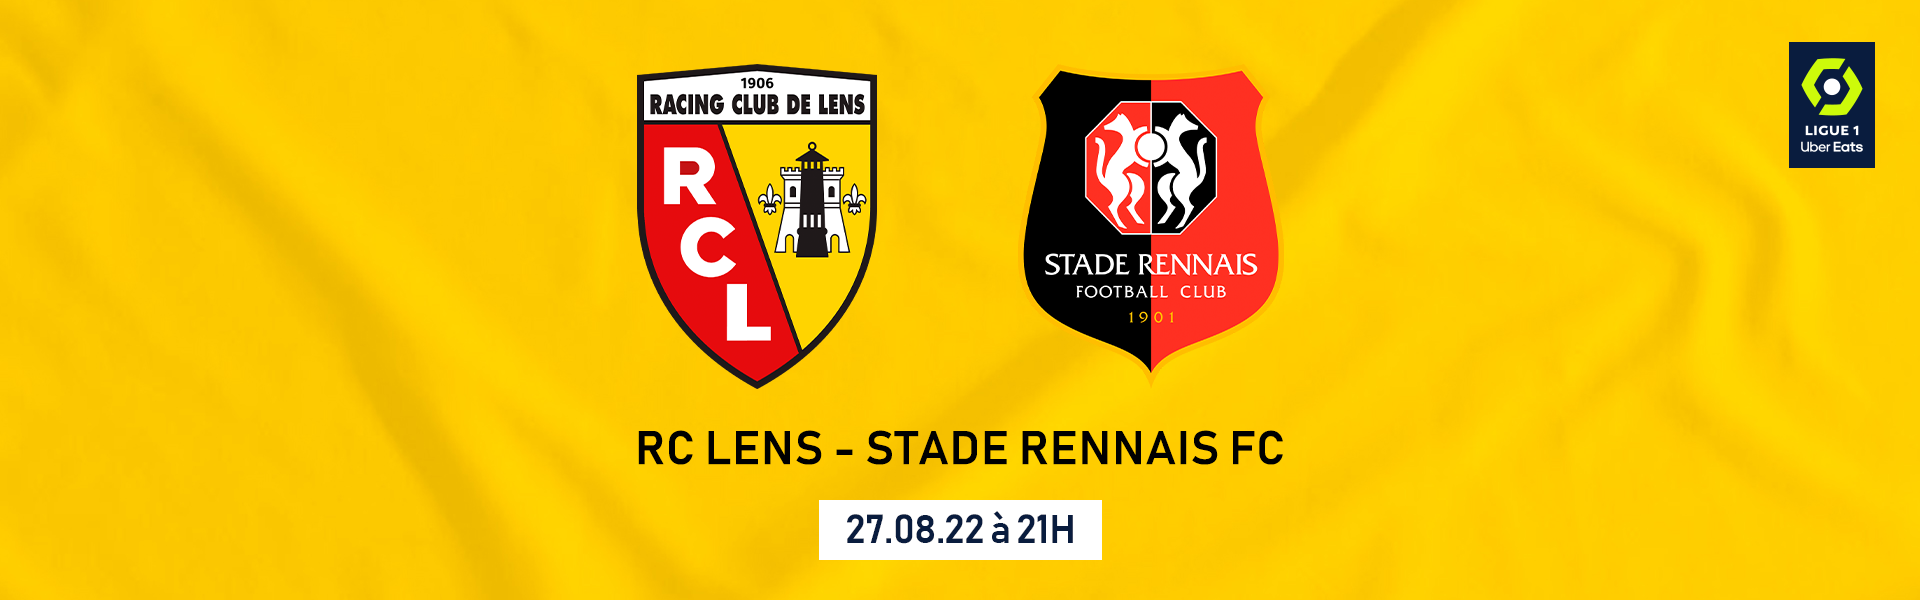 RC LENS / STADE RENNAIS FC